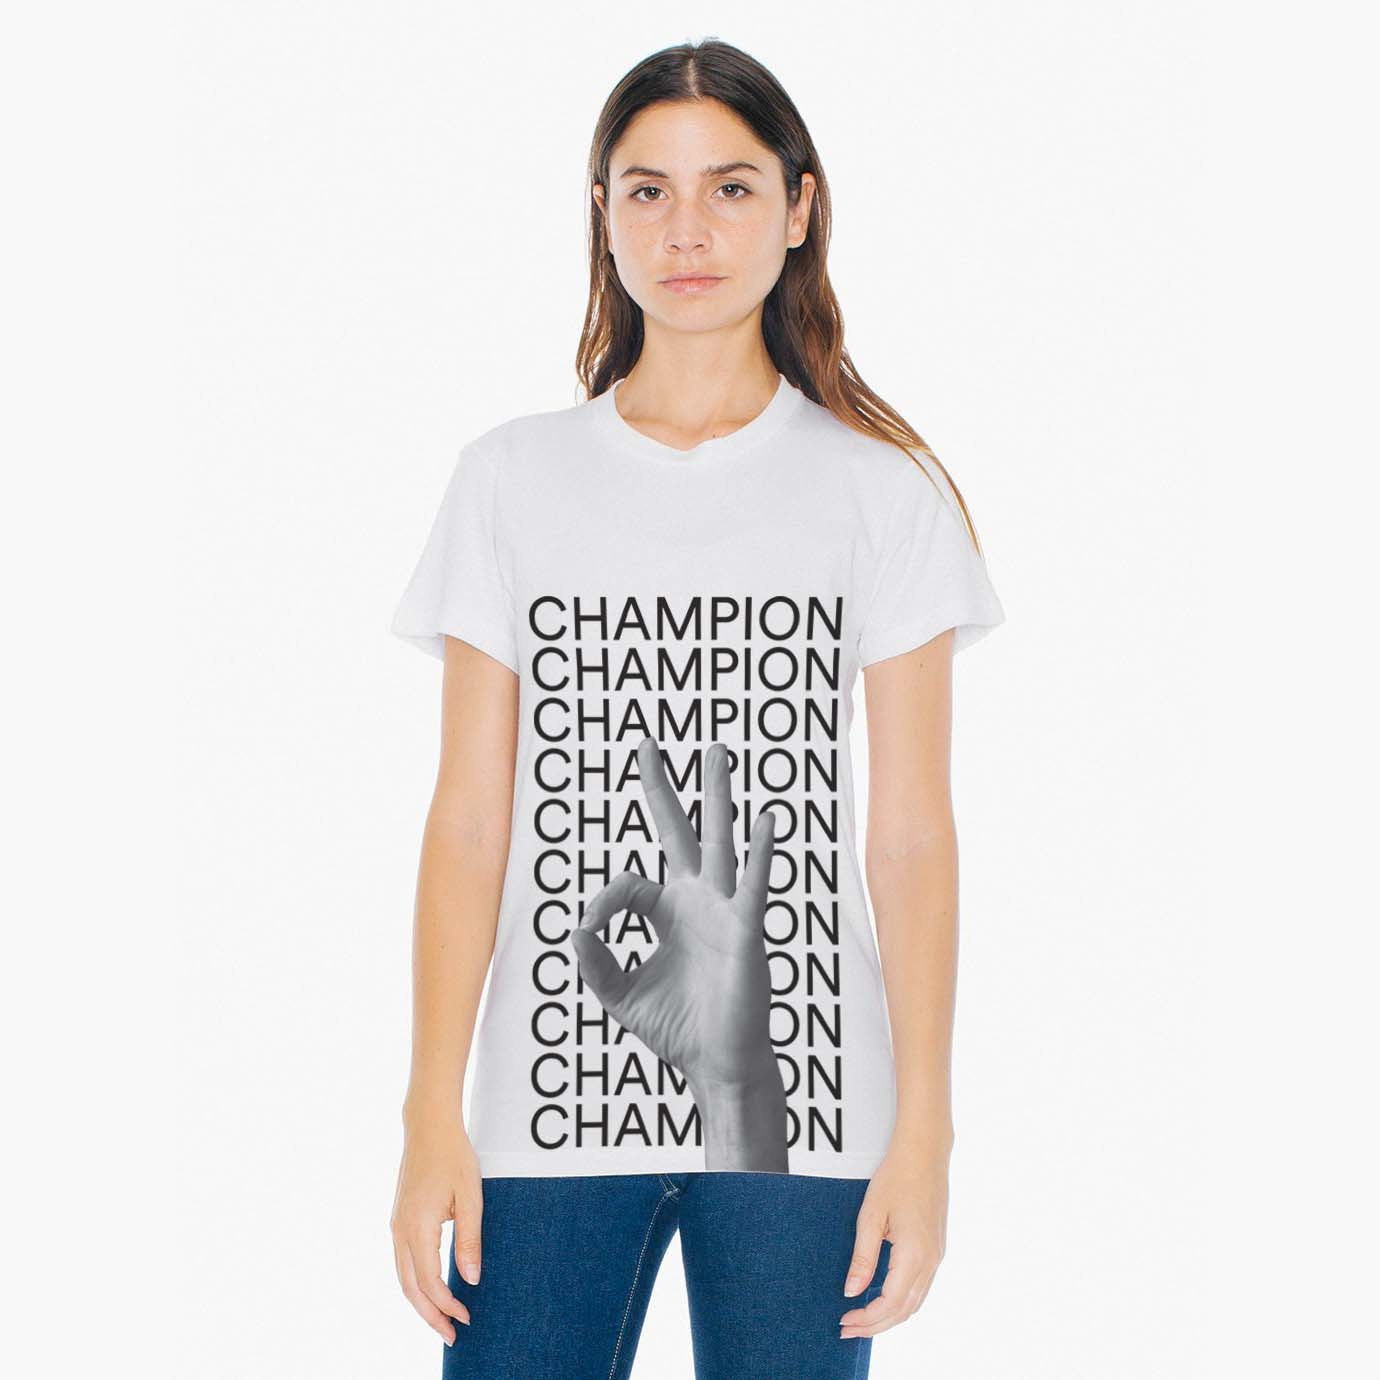 👌 Champion Tee - Women